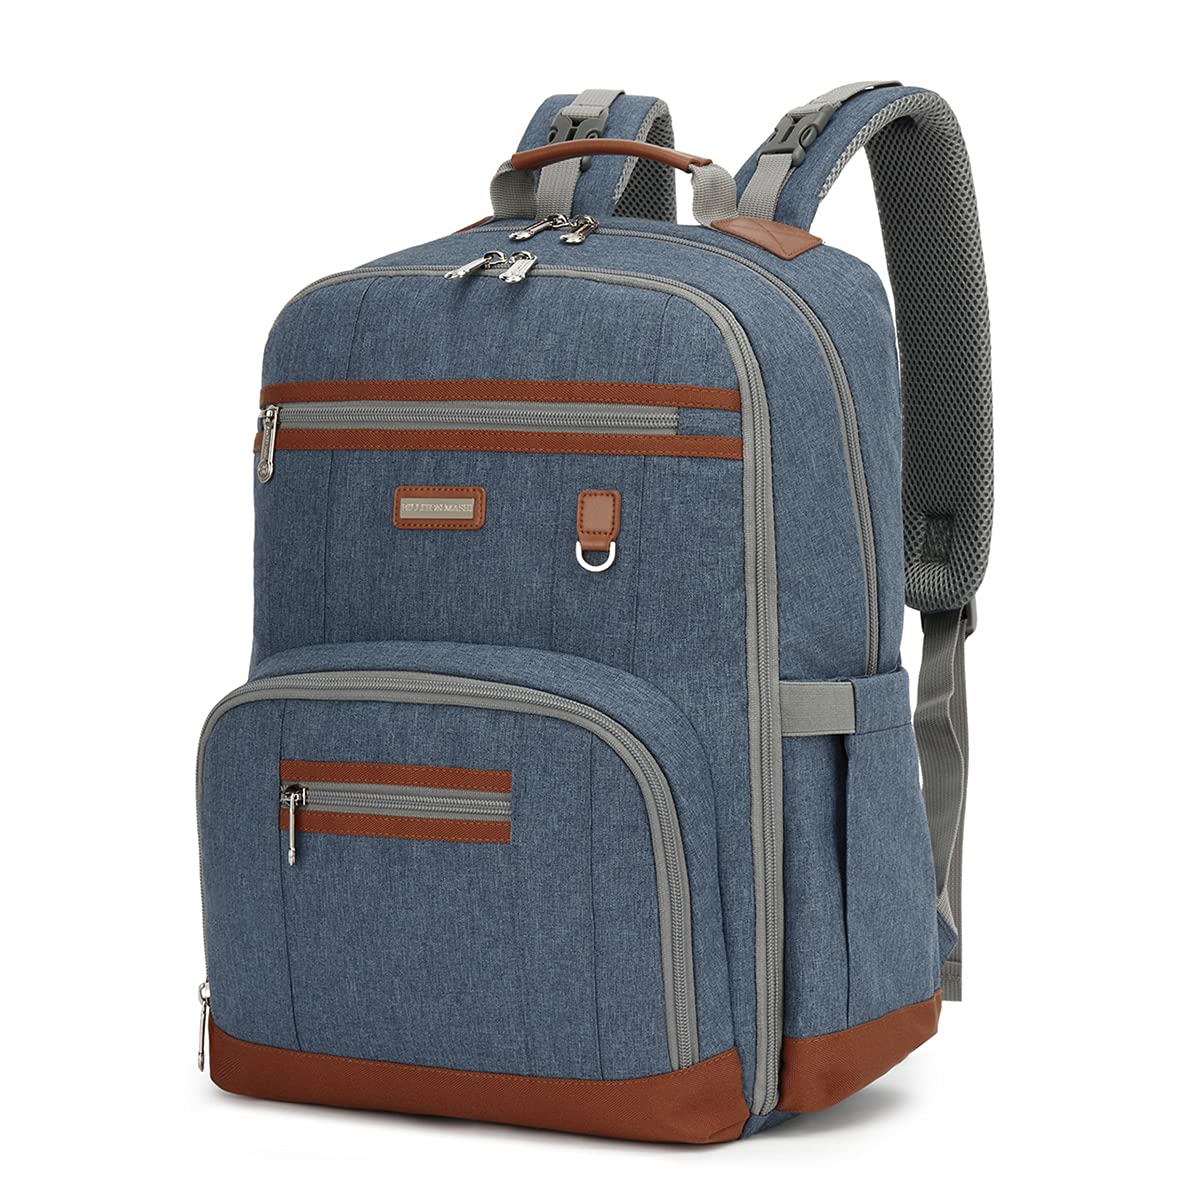 BILLITON MASHI Baby Diaper Bag Backpack (2-Tone Design, InsulatedWaterproof Travel Baby Bag for Boy girl), Large capacity